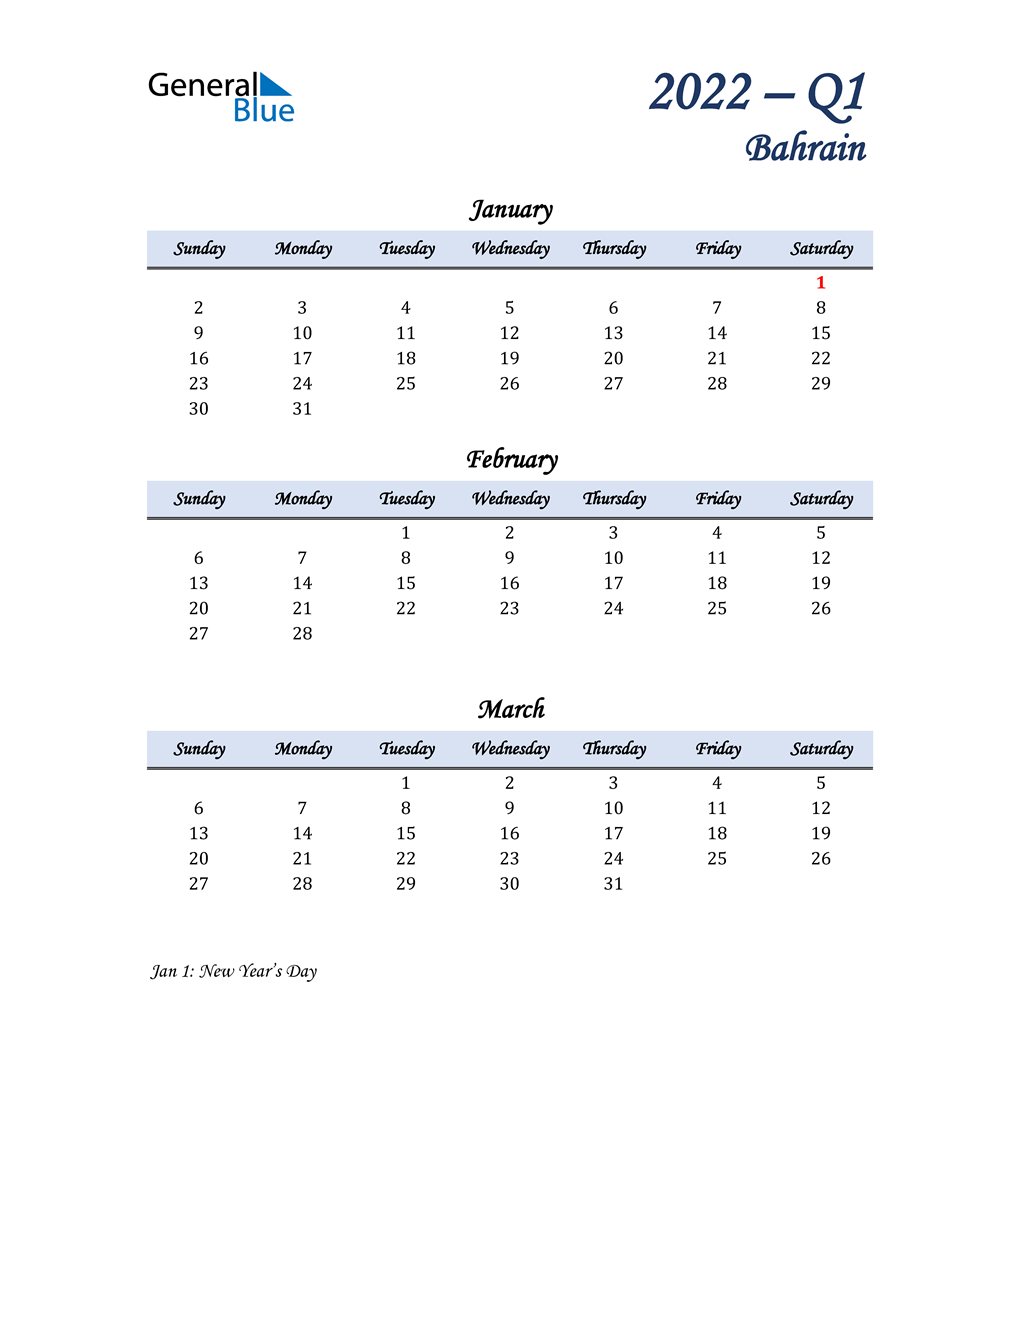  January, February, and March Calendar for Bahrain